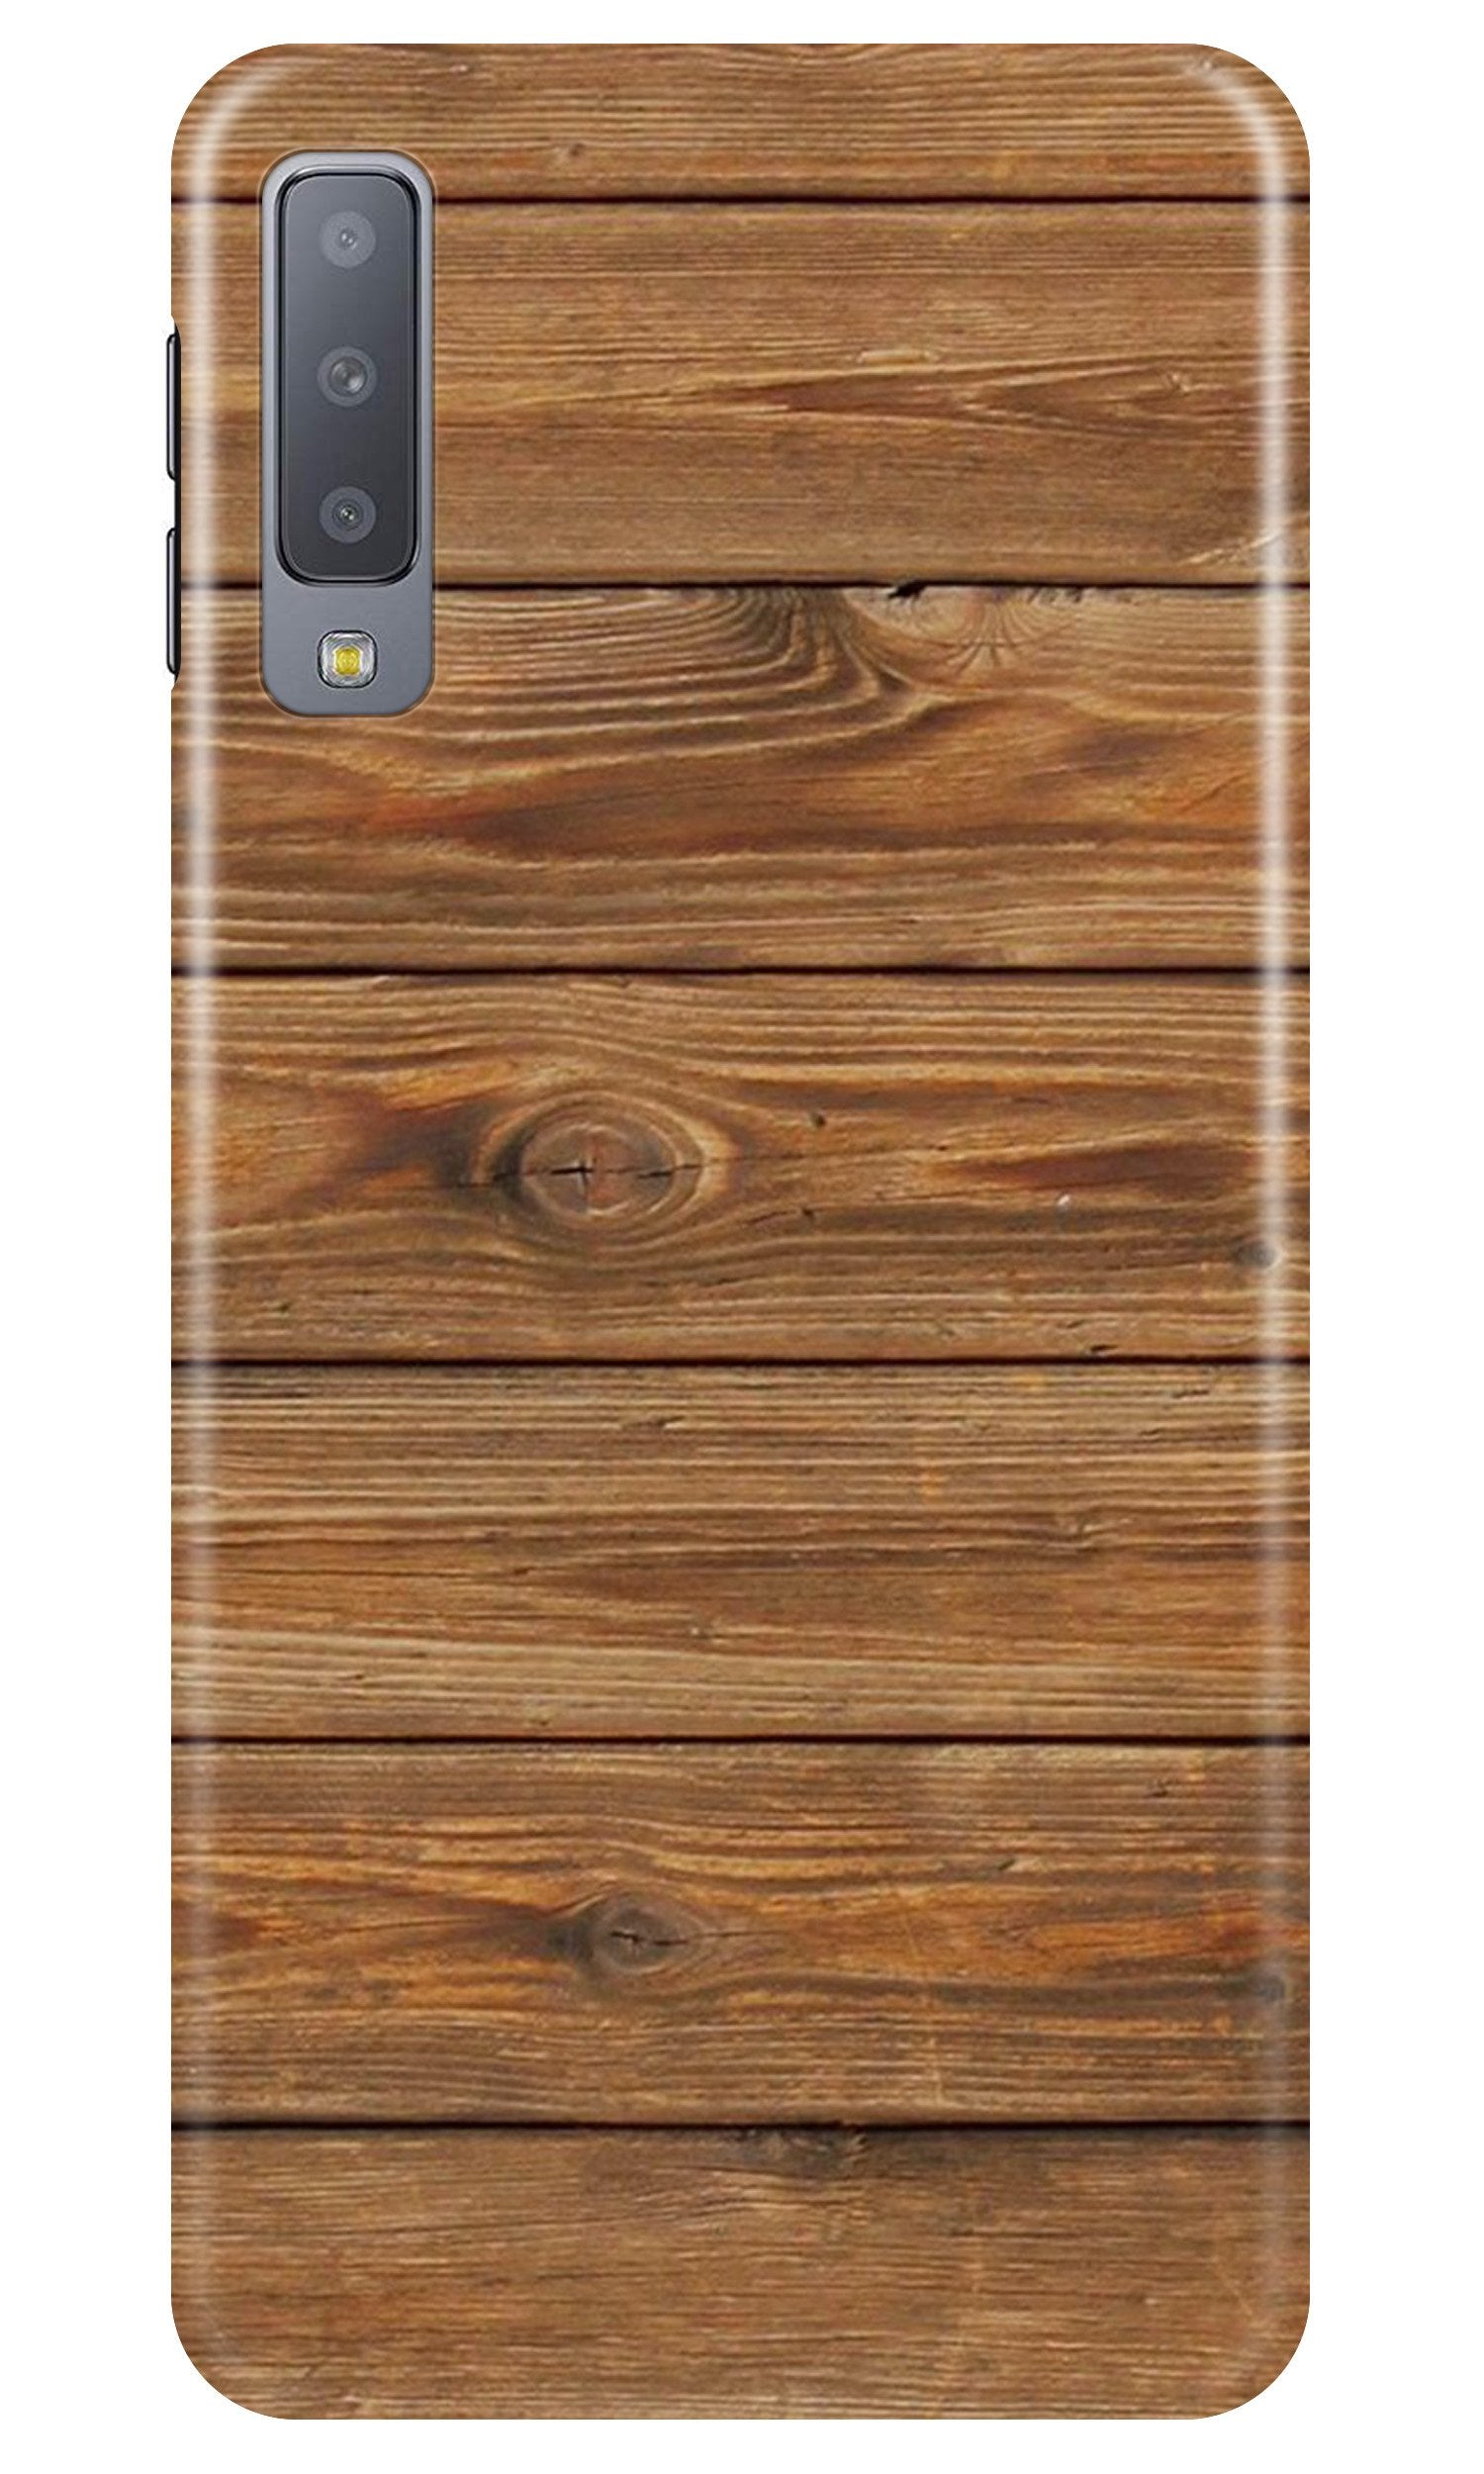 Wooden Look Case for Samung Galaxy A70s(Design - 113)